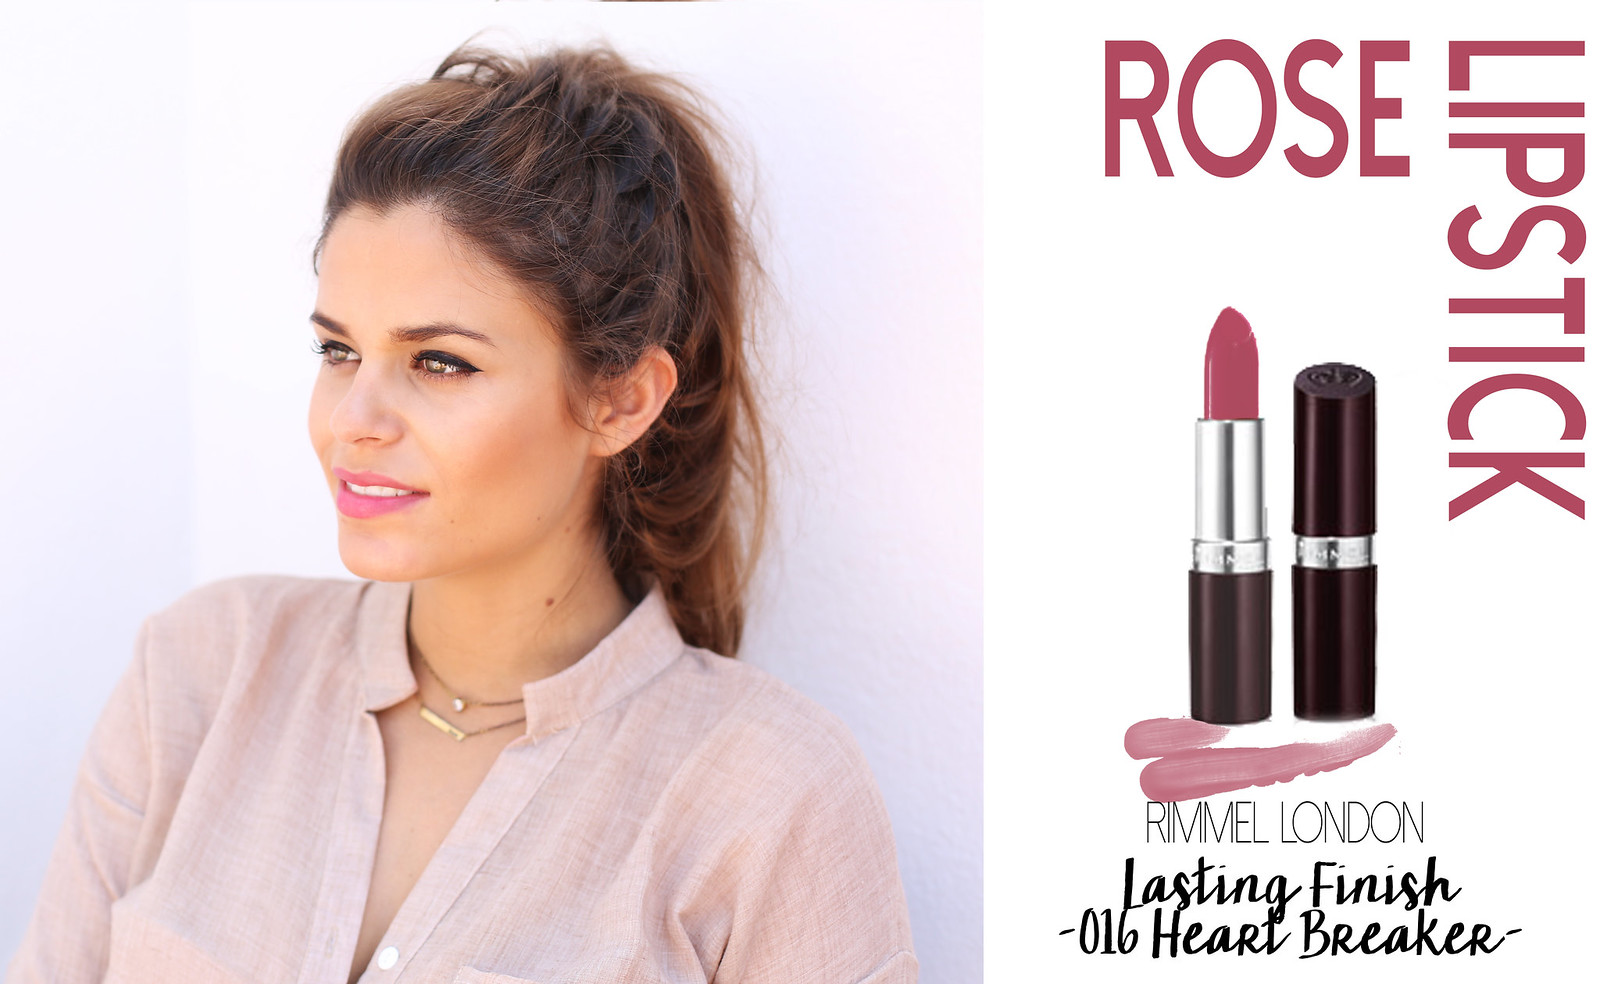 3.rose lipstick - rimmel london